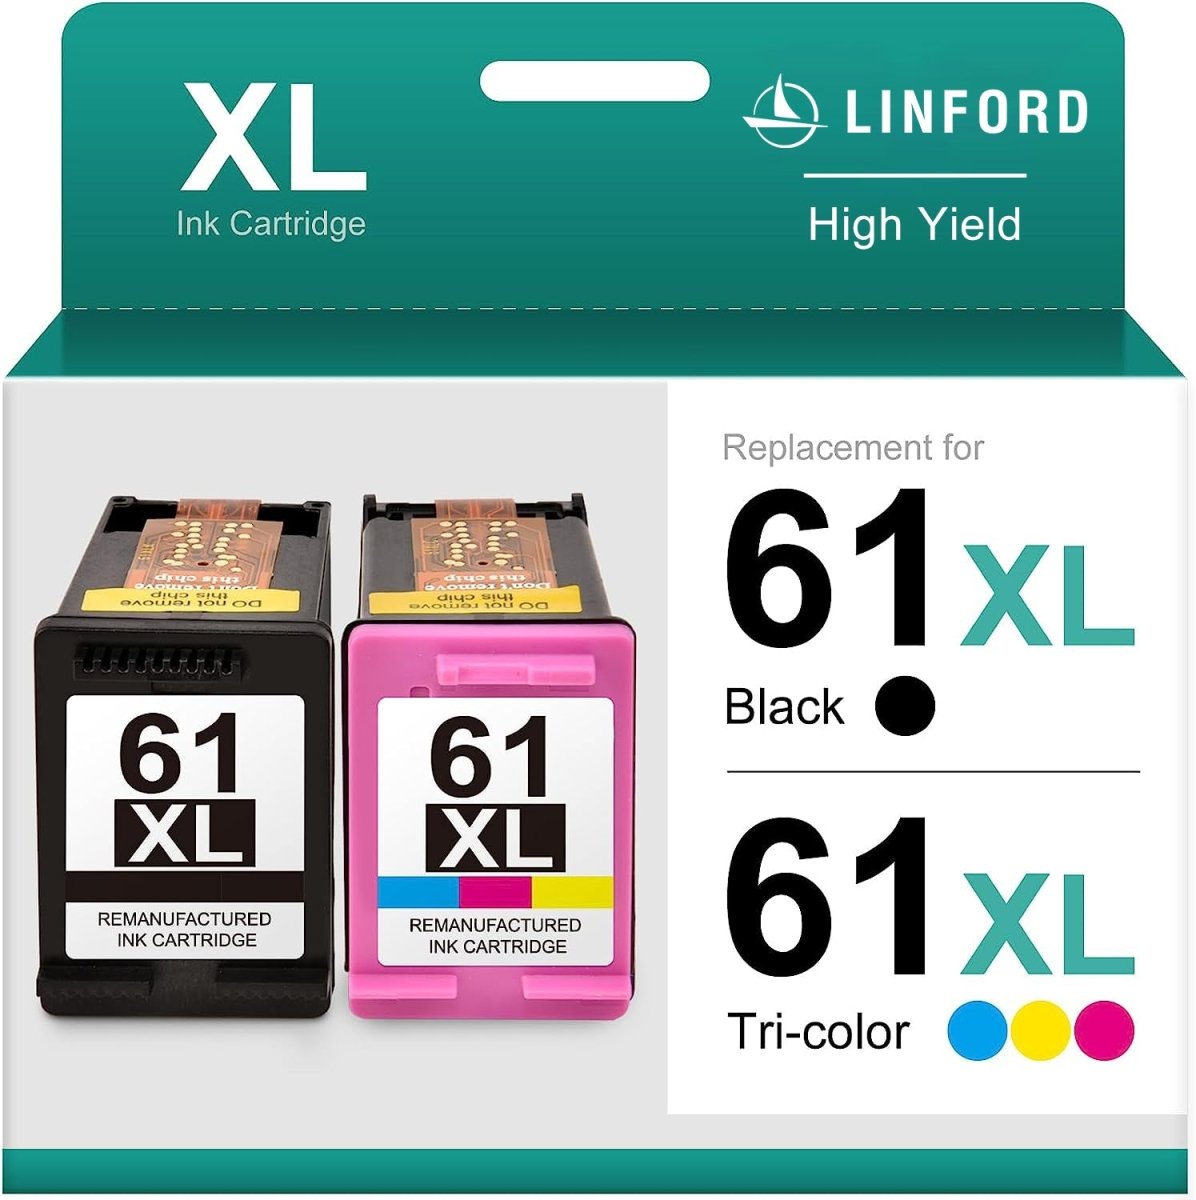 Remanufactured HP 61XL Ink Cartridge Combo Pack (Black + Tri-Color) - Linford Office:Printer Ink & Toner Cartridge